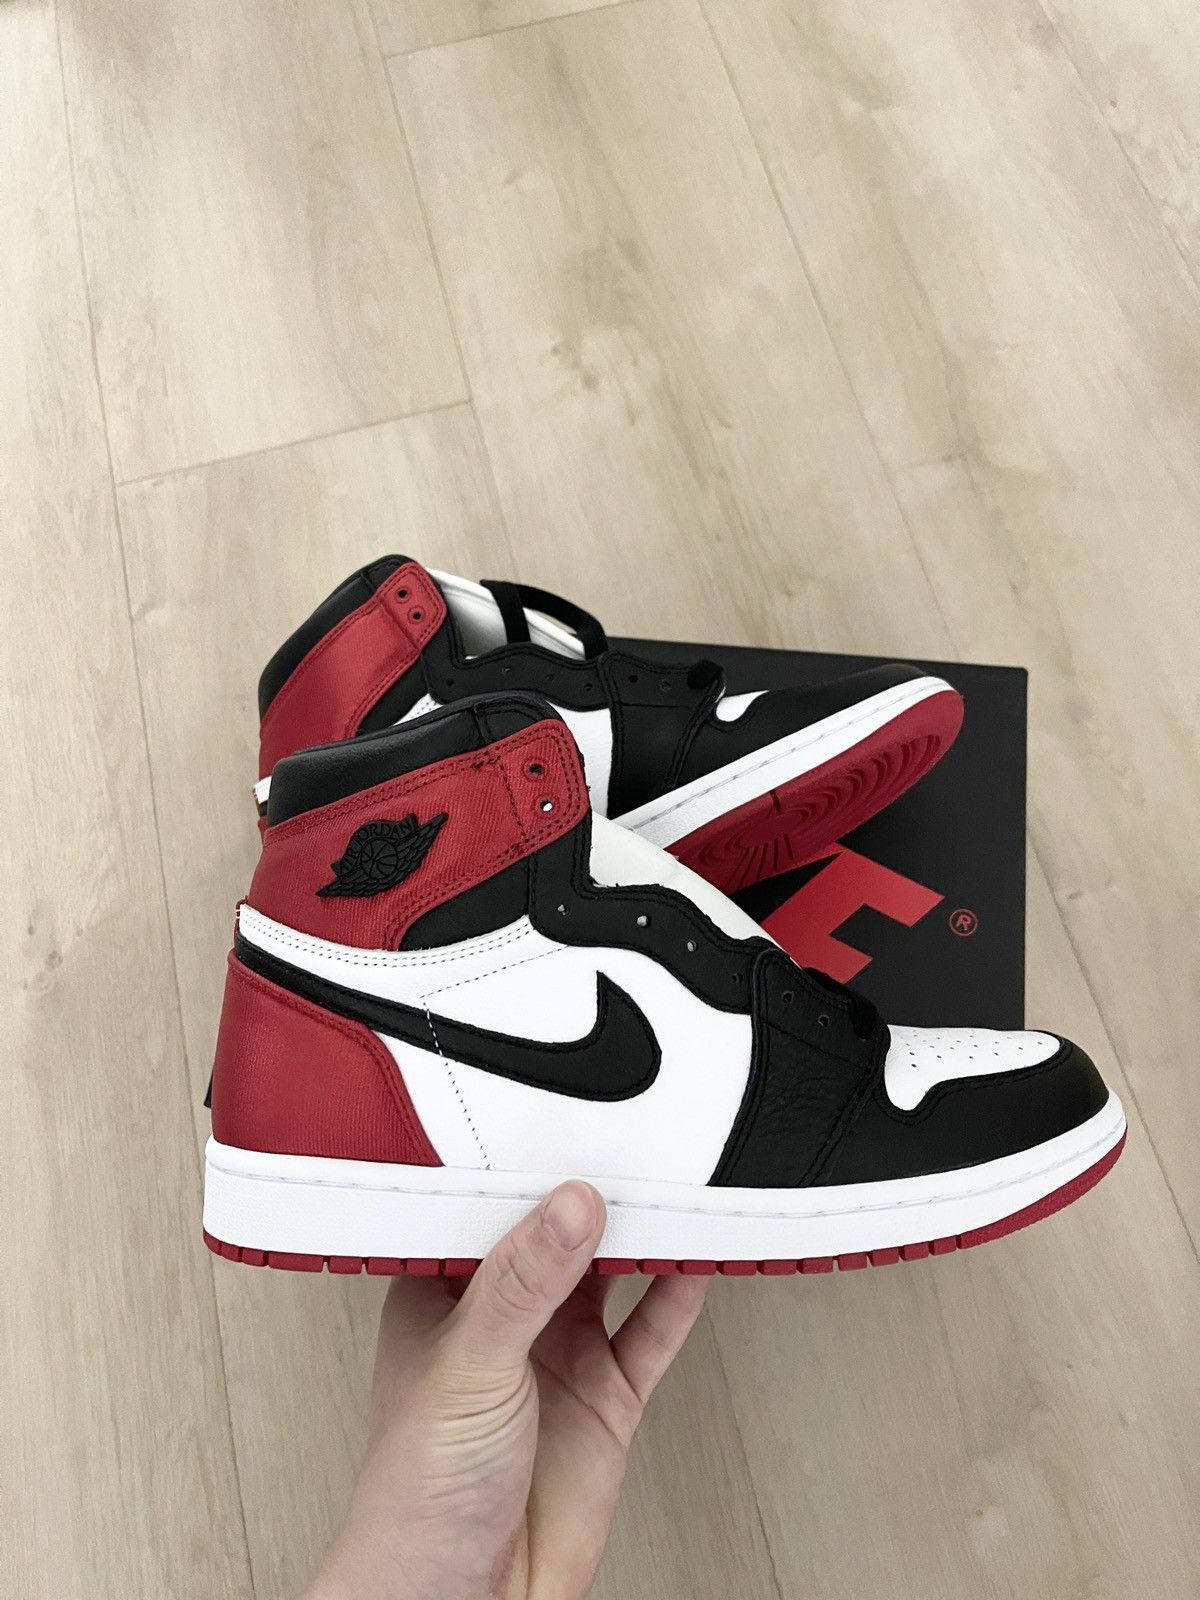 Jordan Brand - 2019 Air Jordan 1 High Saint Black Toe (Men Size 7.5) - 1